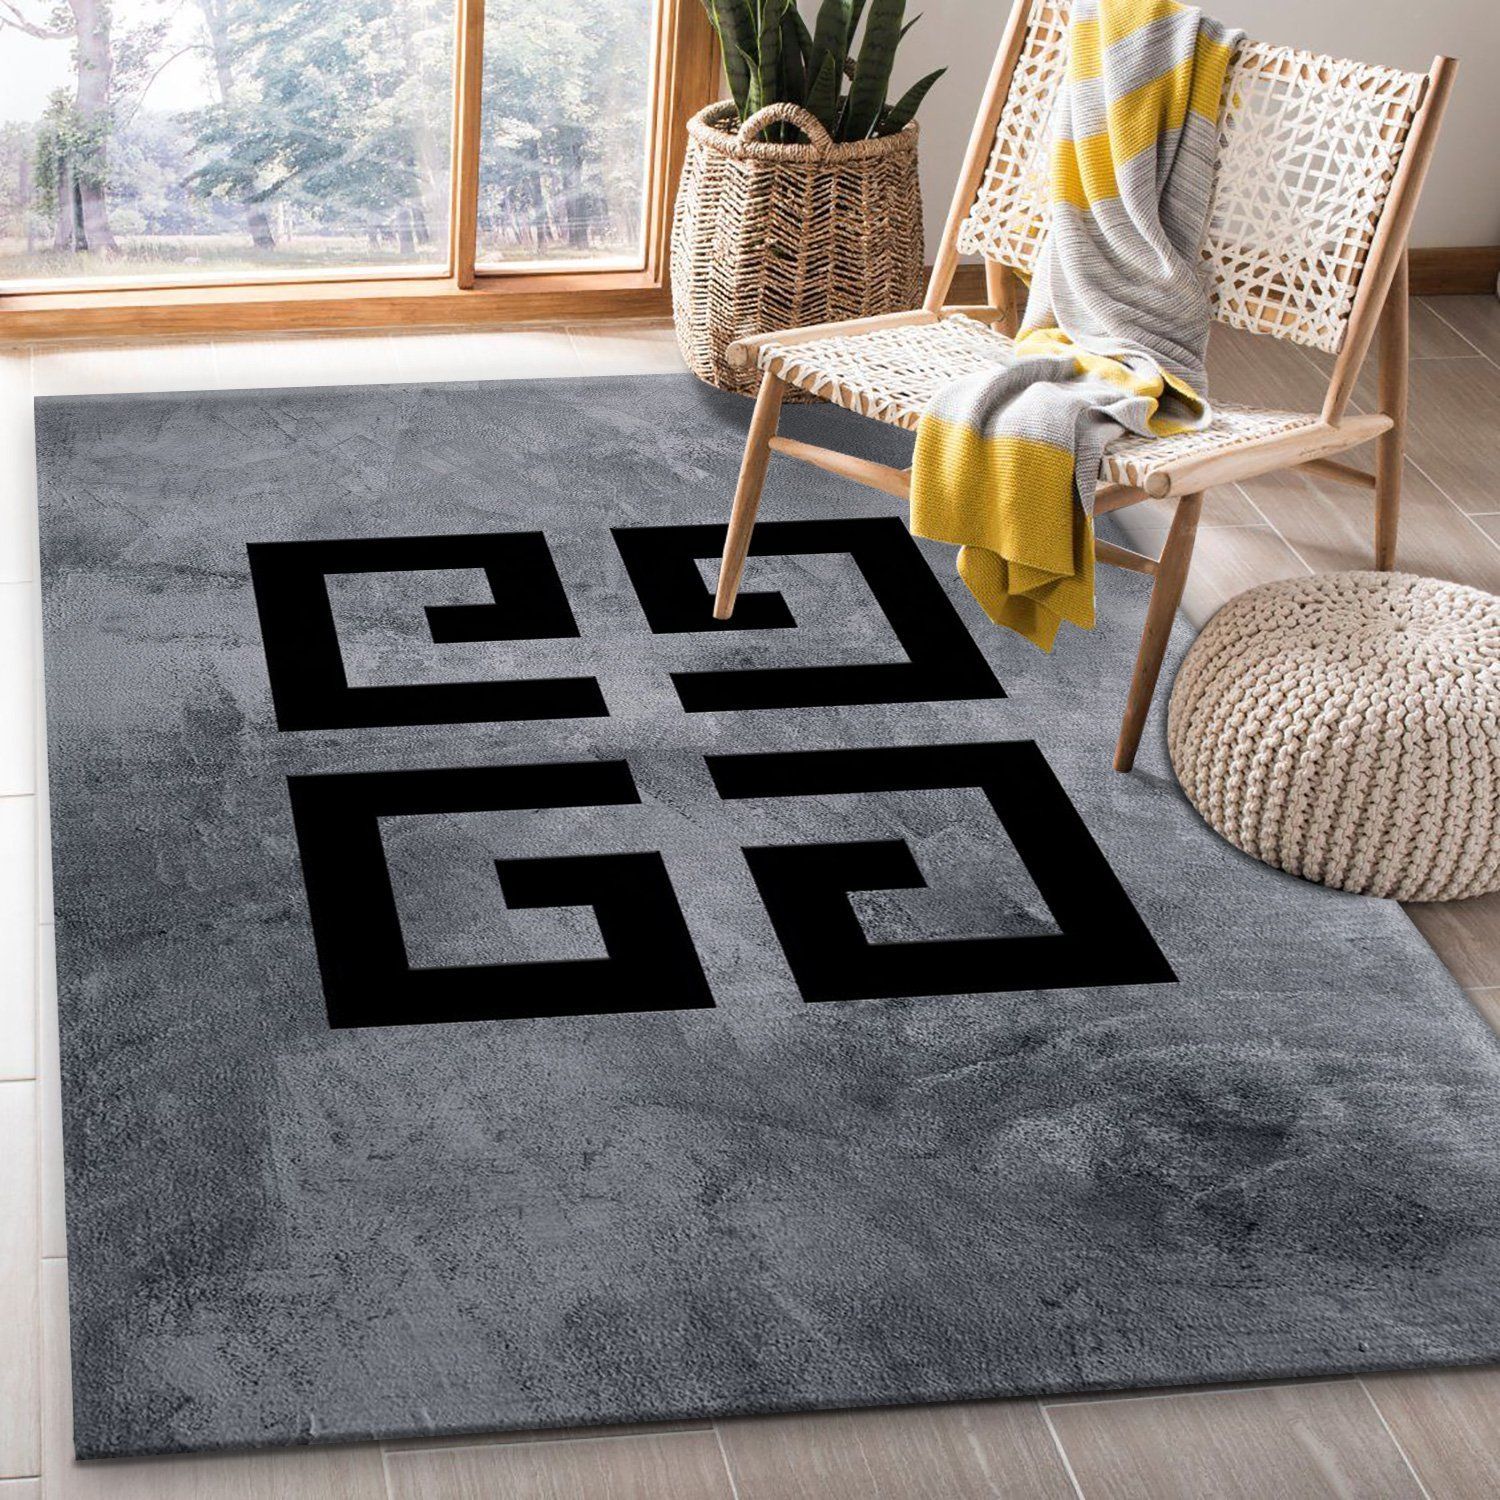 Givenchy Rug Fashion Brand Rug Home Decor Floor Decor - Indoor Outdoor Rugs 2